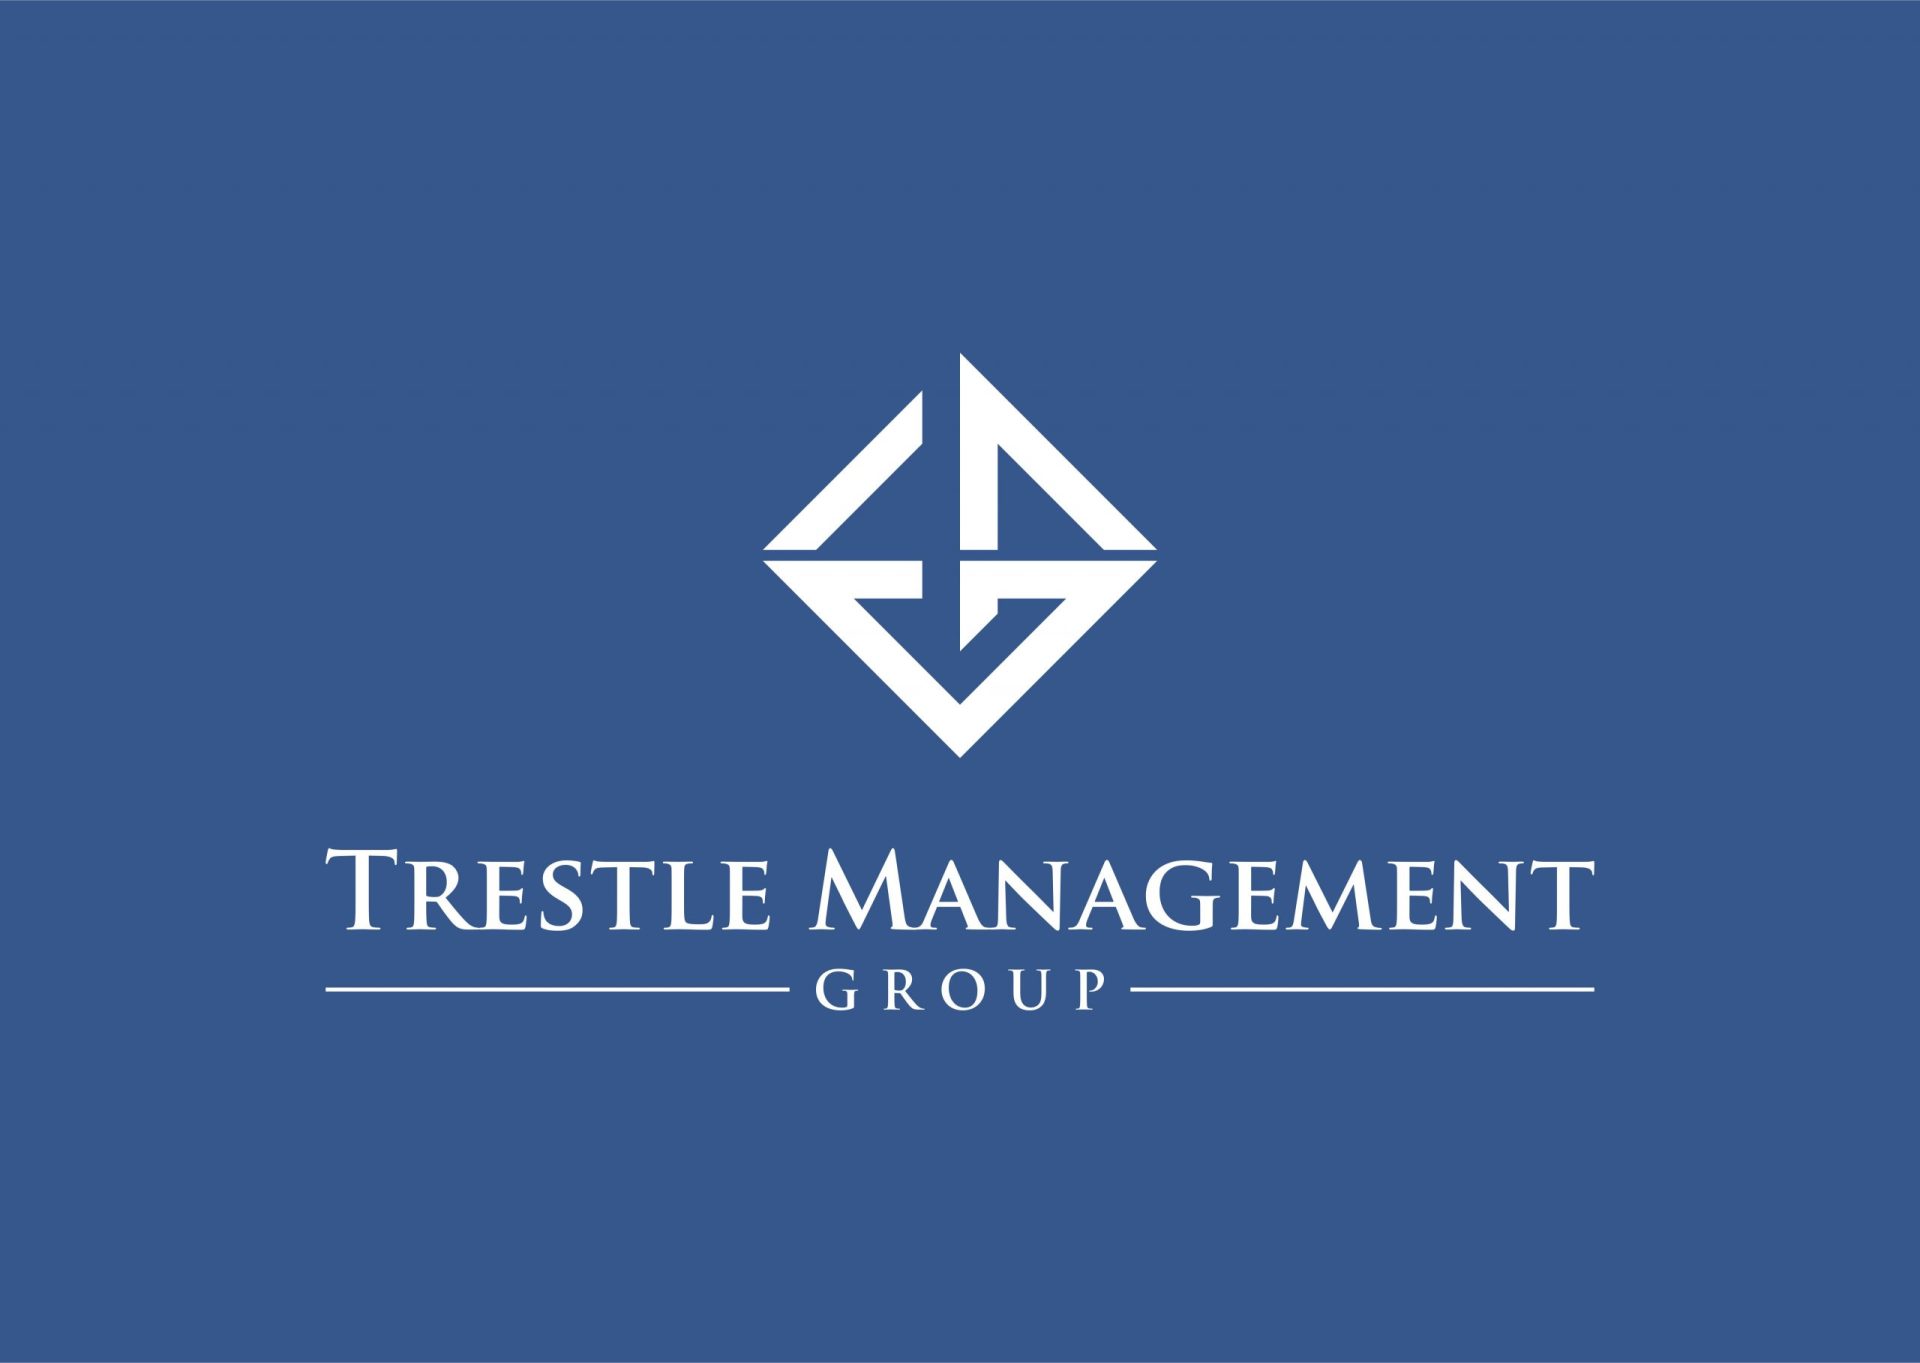 Trestle Management Group